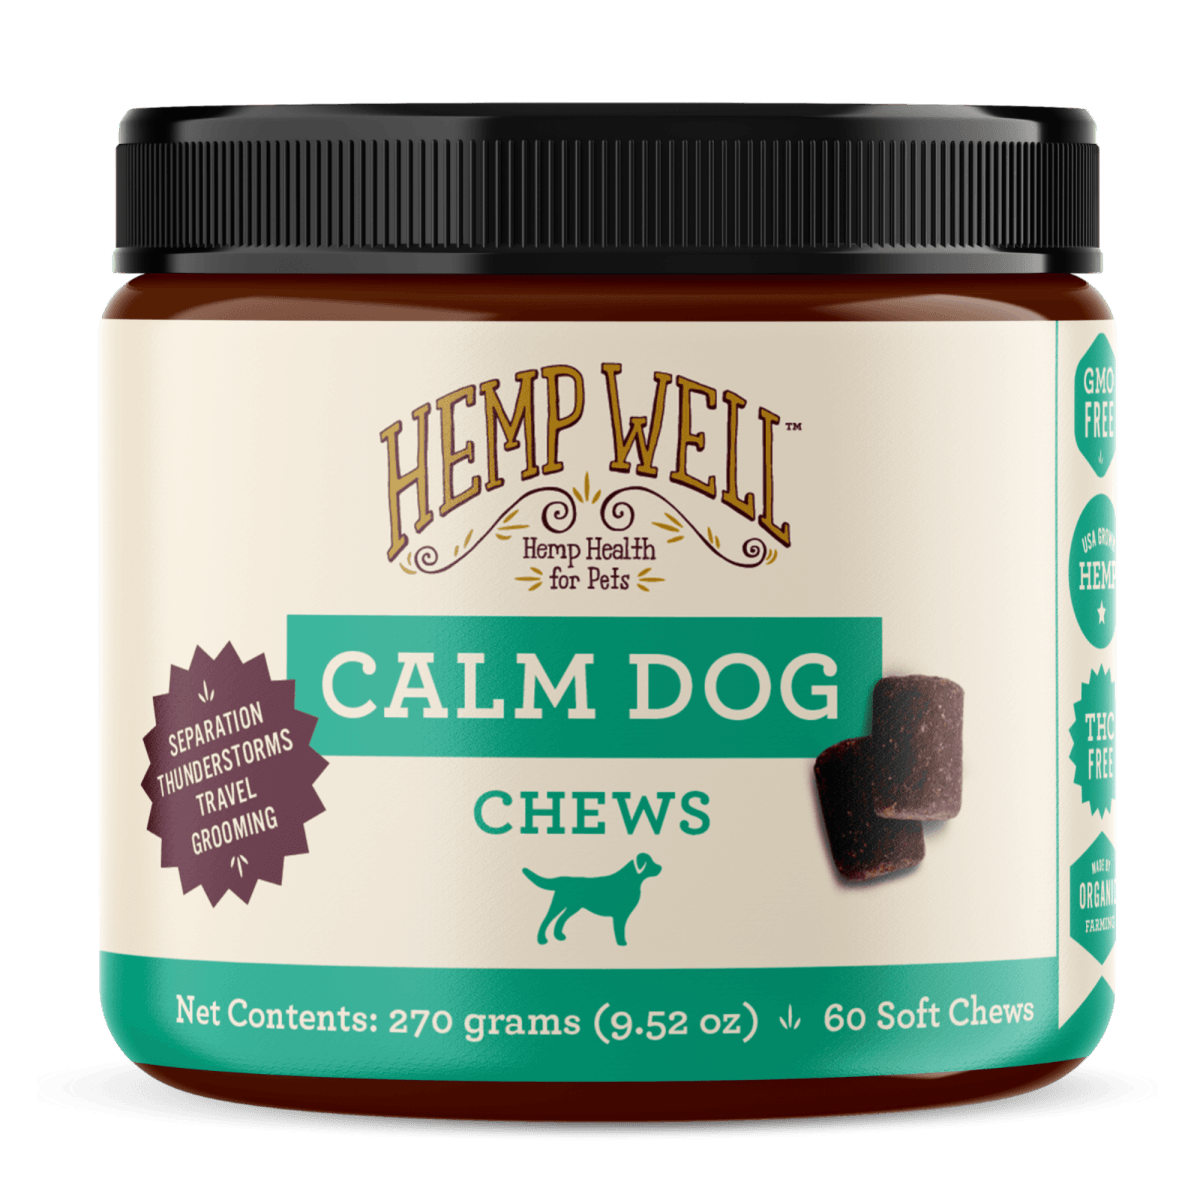 Calm Dog Soft Chews - Hemp Well. Relaxing Canine Soft Chews Infused with Organic Hemp, Chamomile, and Melatonin